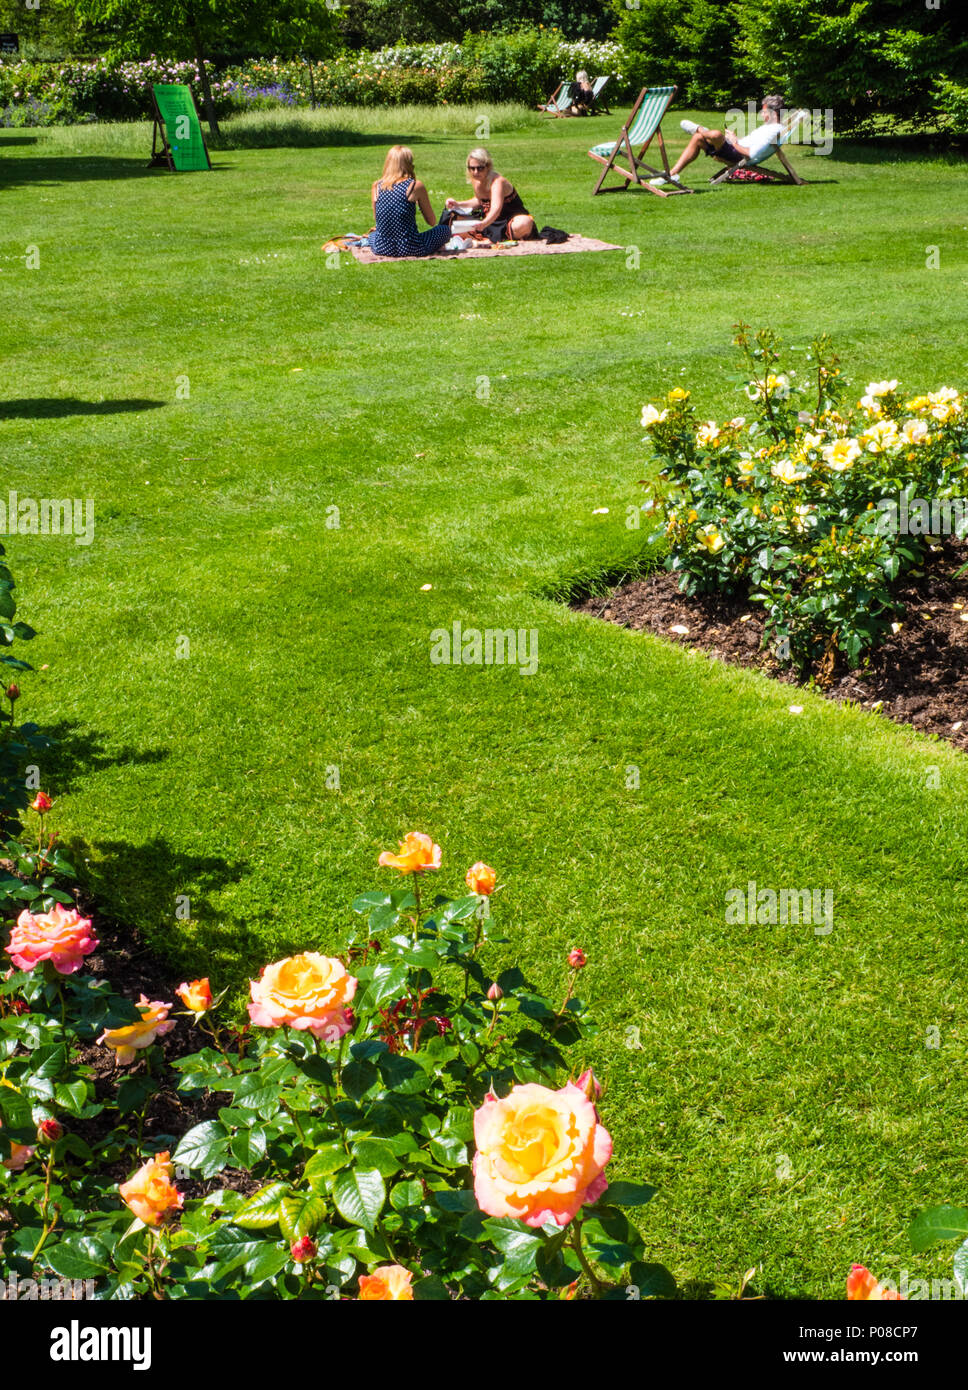 People Relaxing in Sunshine, Queen Mary's Gardens, Rose Garden, Regents Park, London, England, UK, GB. Stock Photo